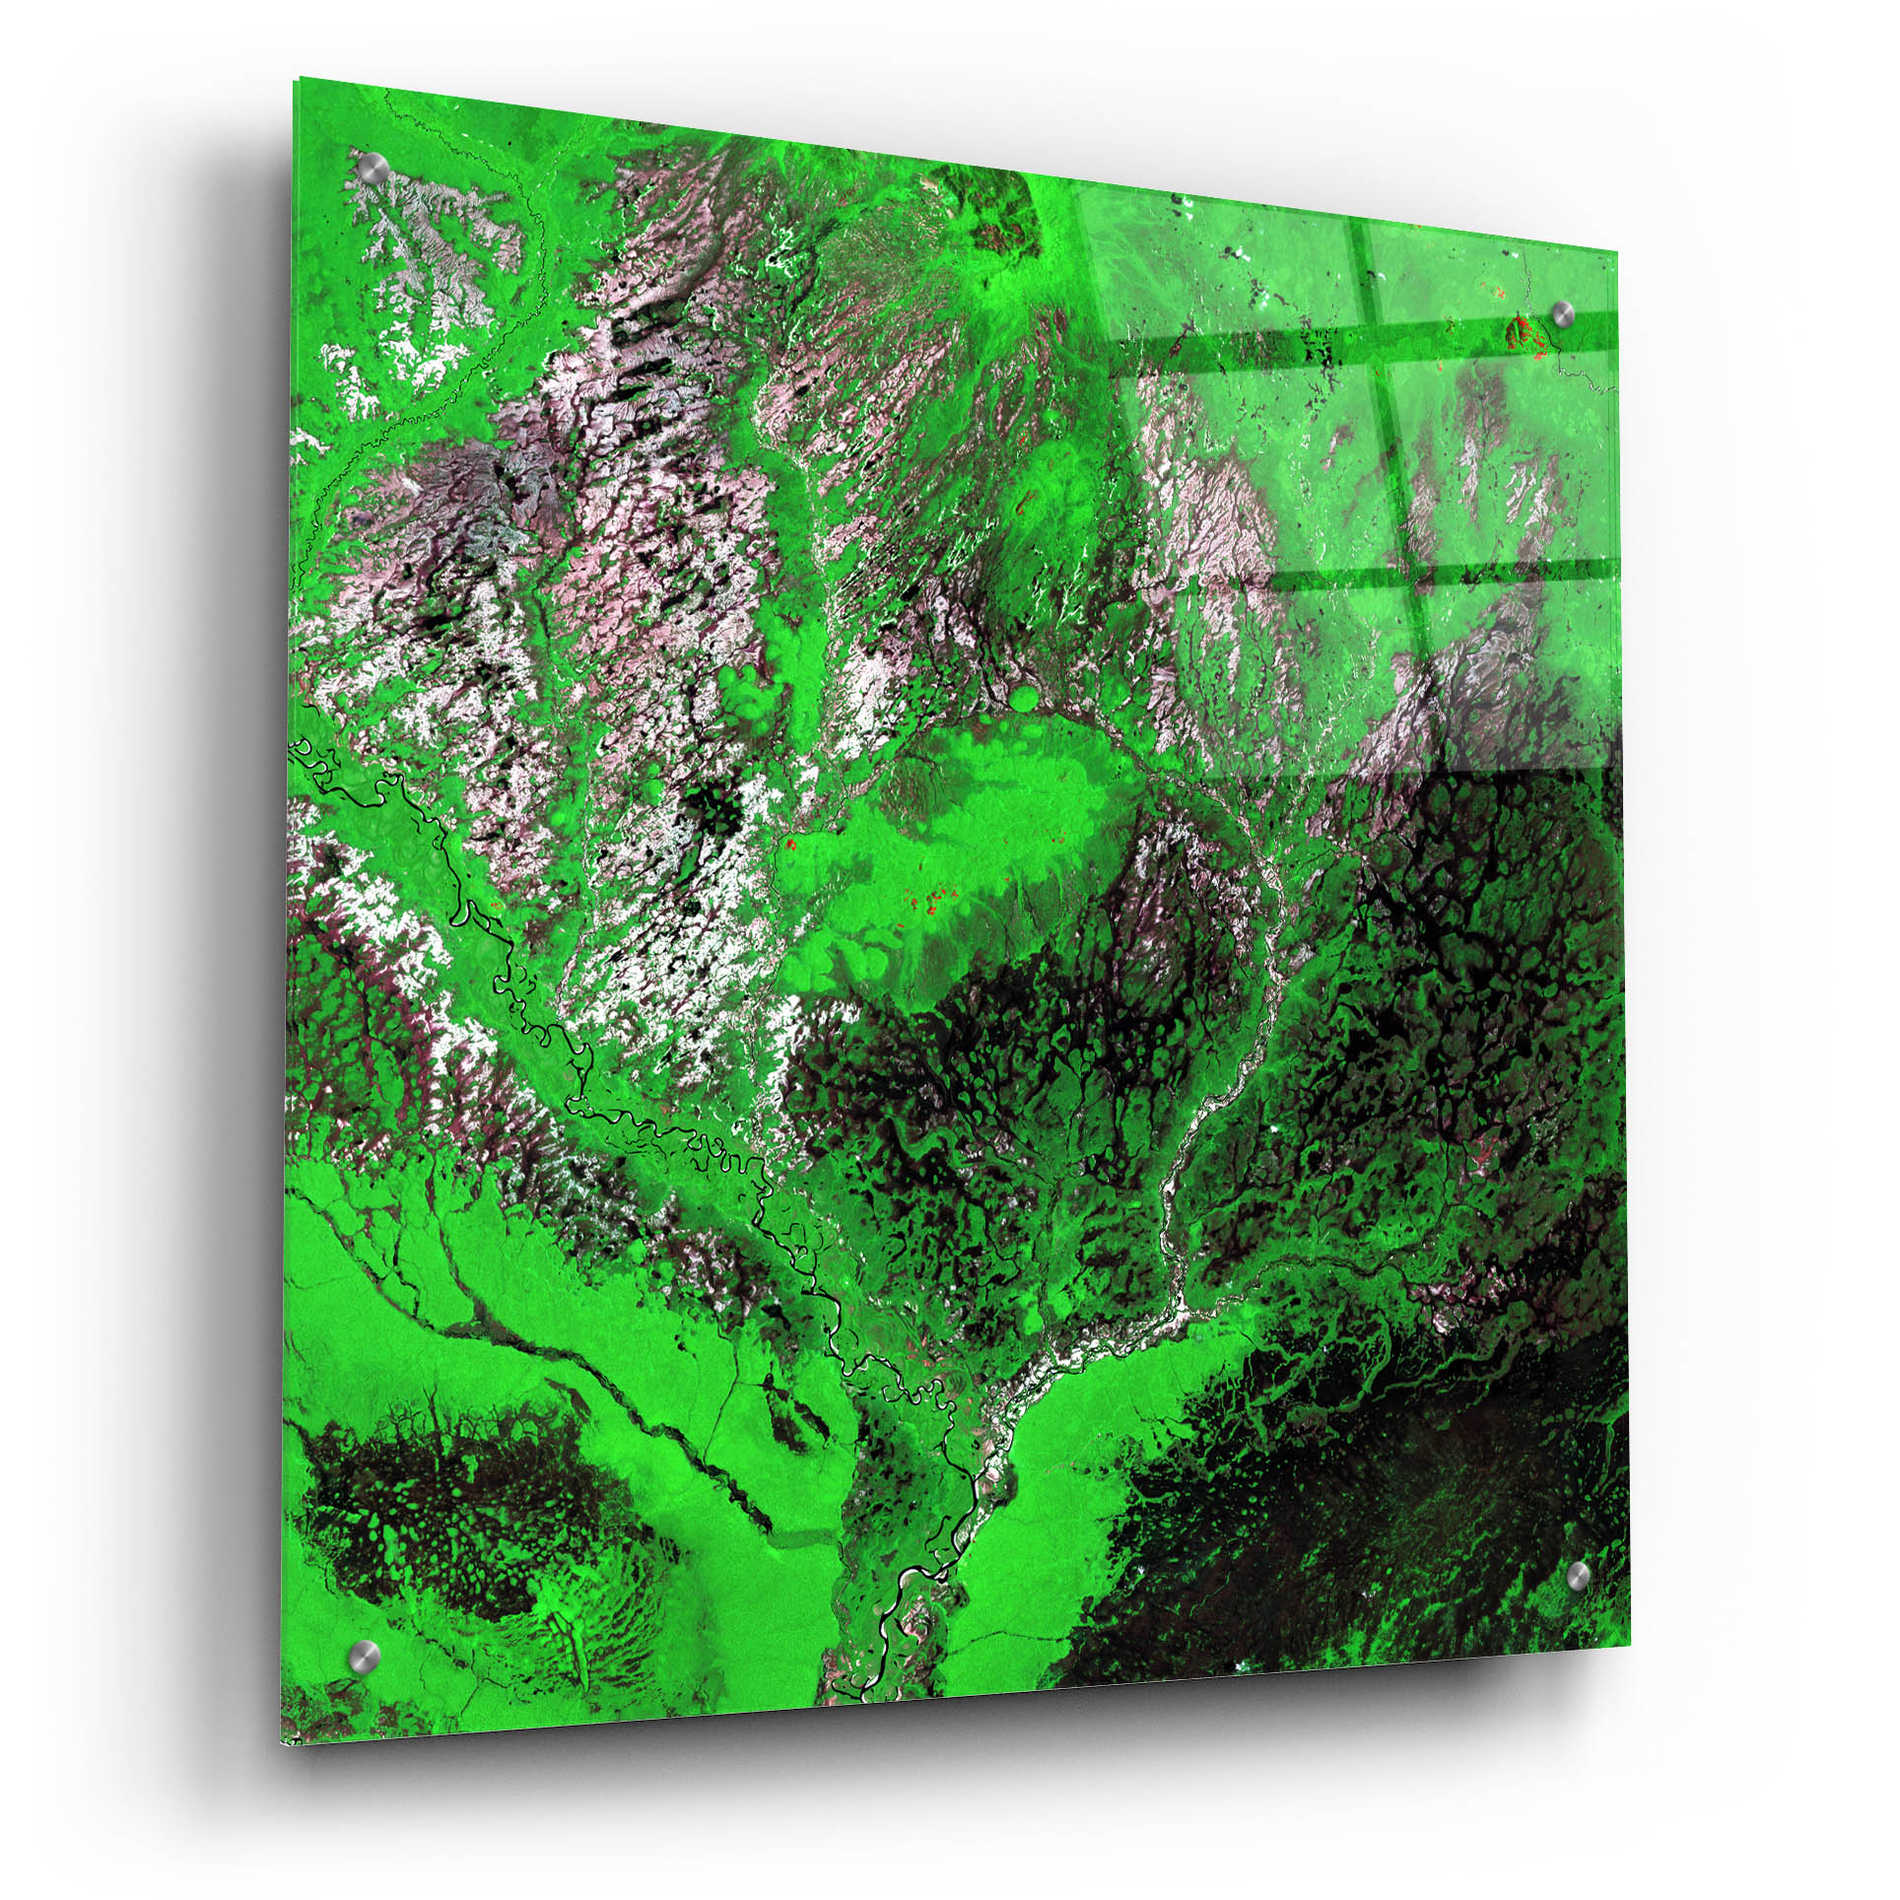 Epic Art 'Earth as Art: Araca River' Acrylic Glass Wall Art,24x24